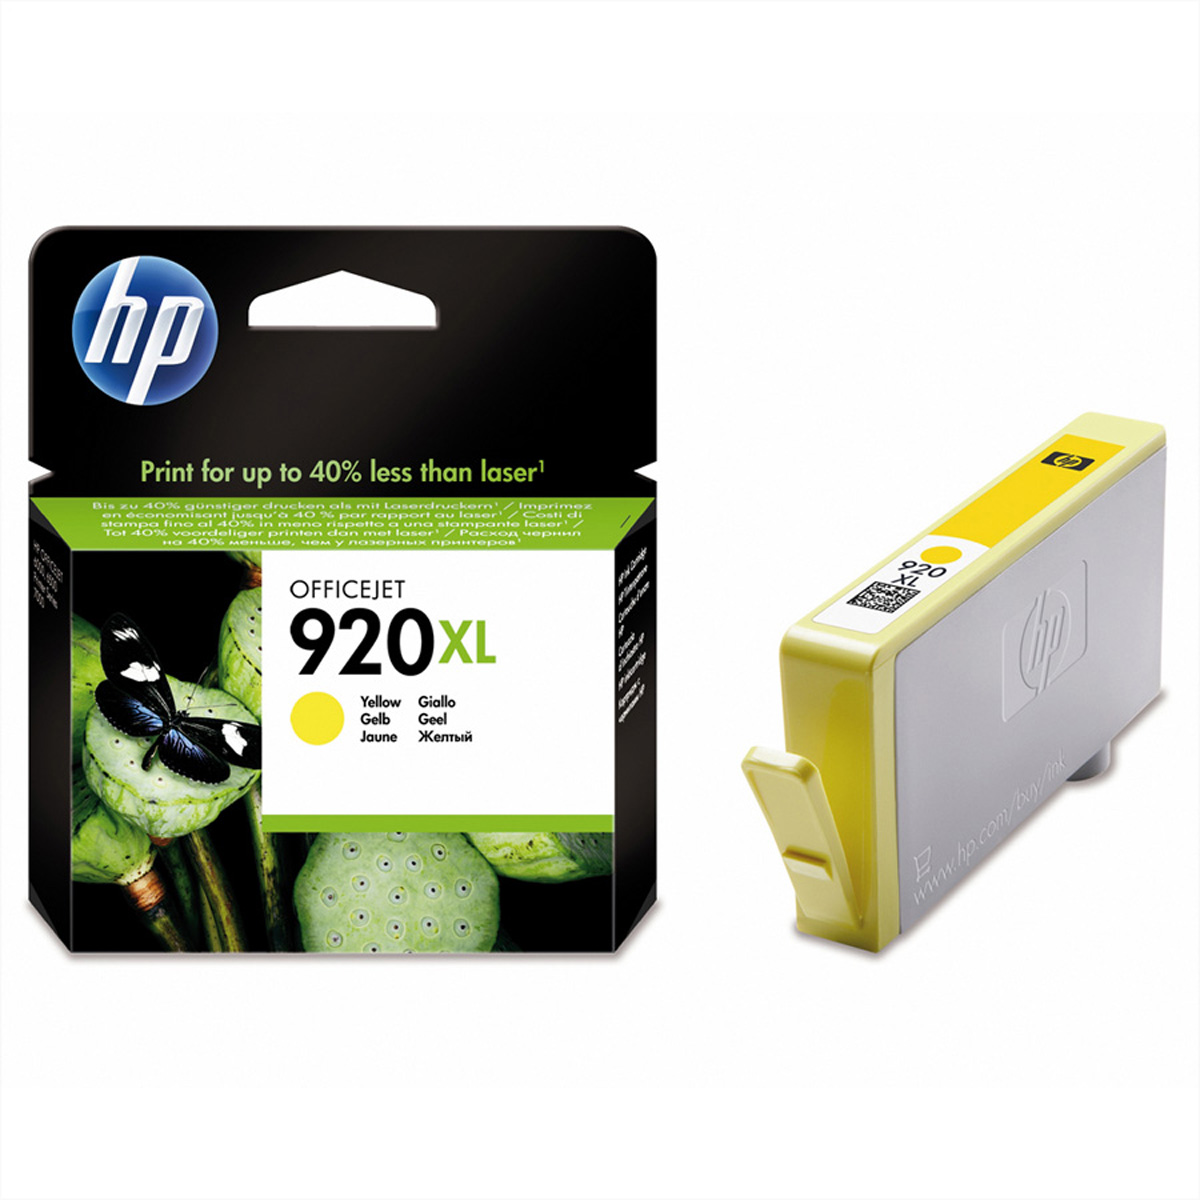 CD974AE, Nr. 920XL, Druckpatrone, yellow für HP-OfficeJet 6000 / 6500